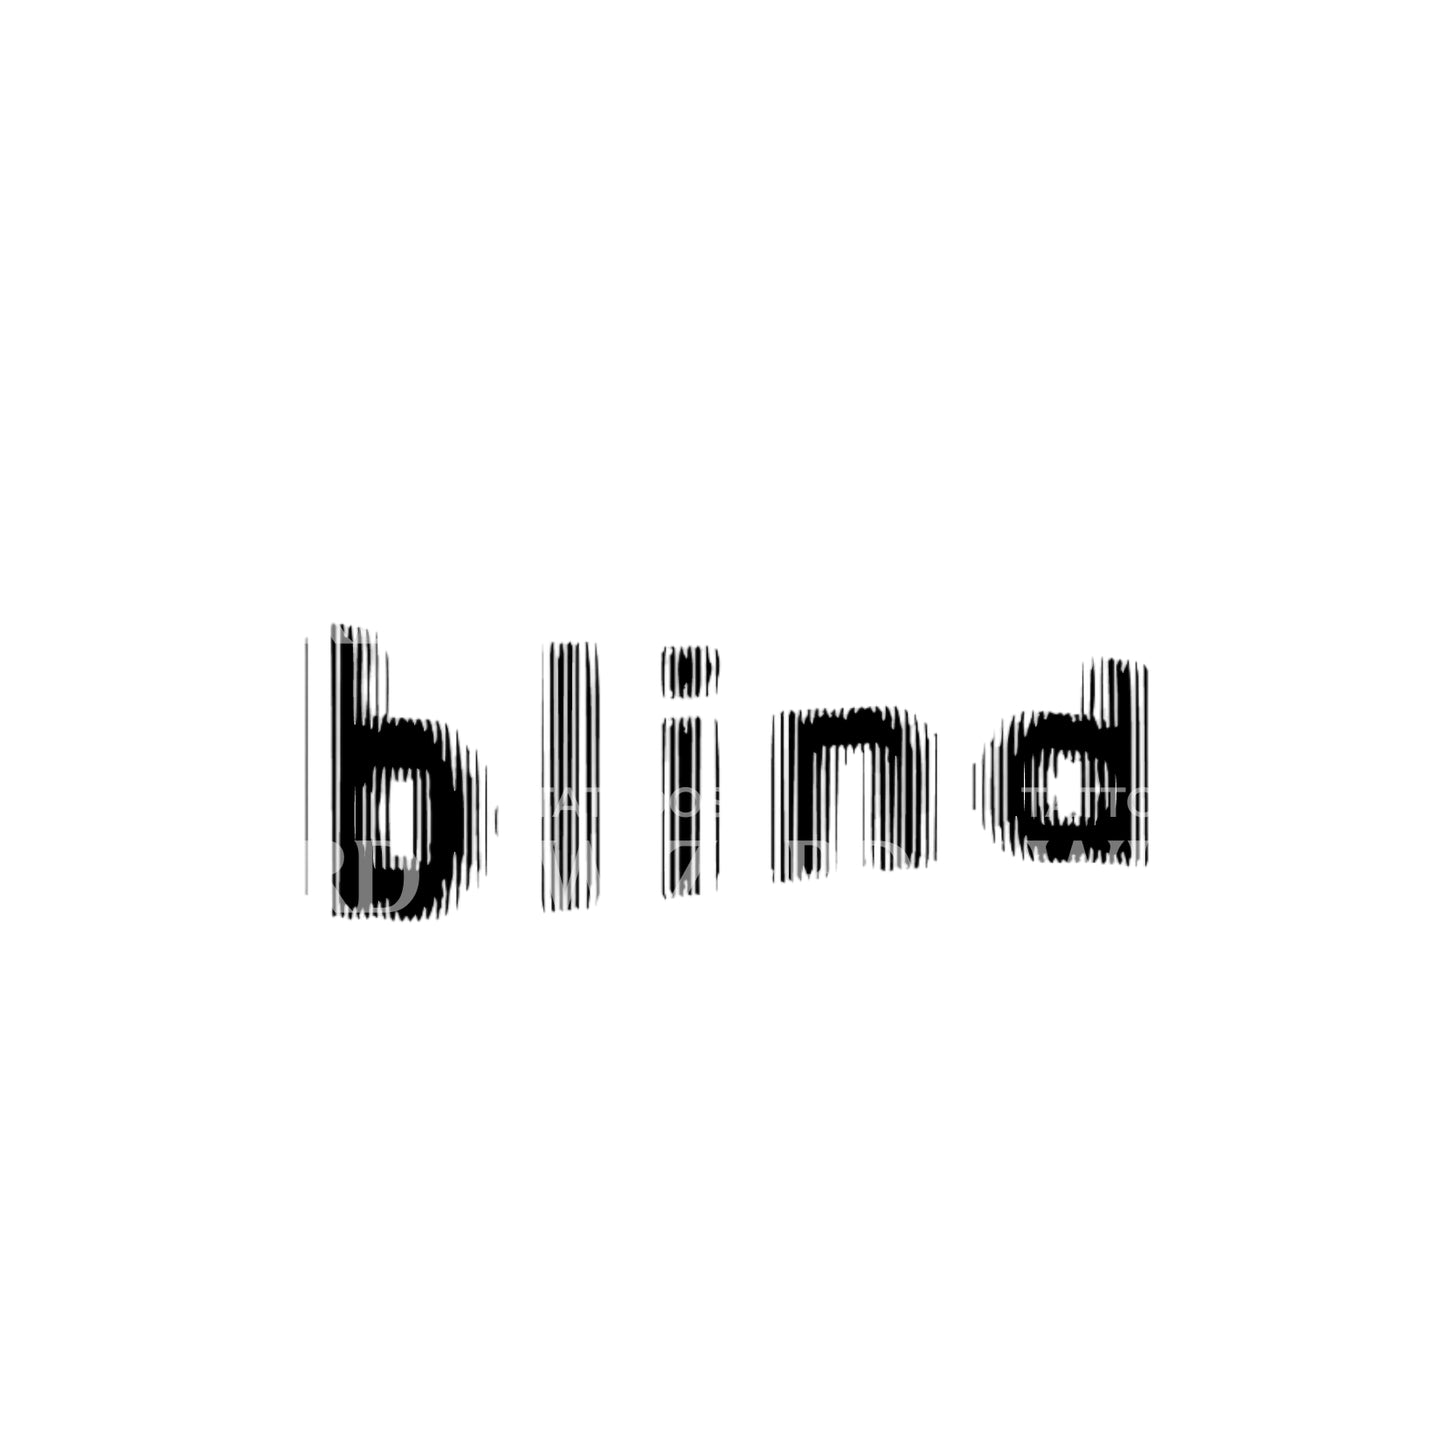 Blind Blurry Font Lettering Tattoo Design